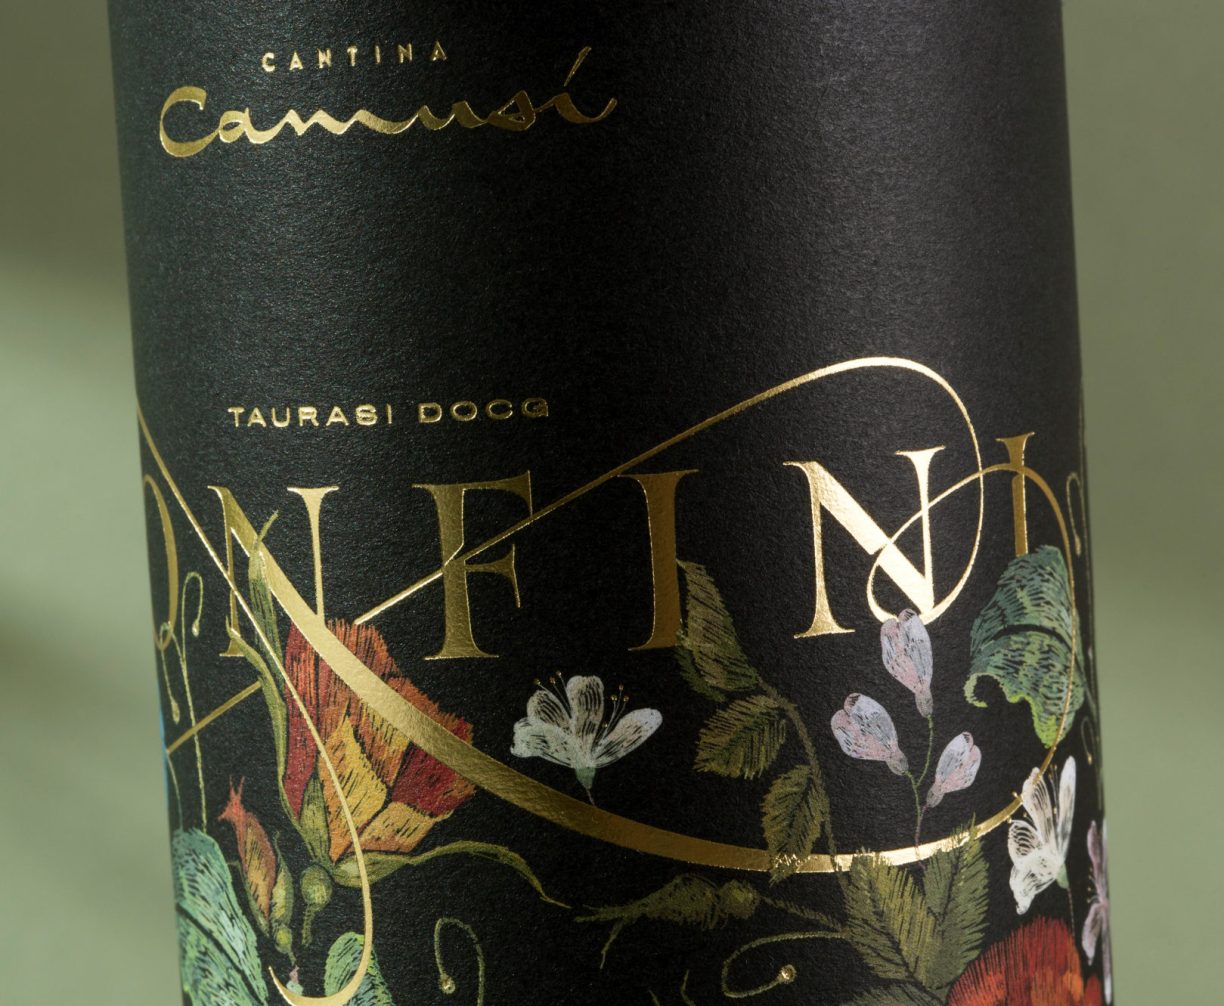 Confini Wine Label